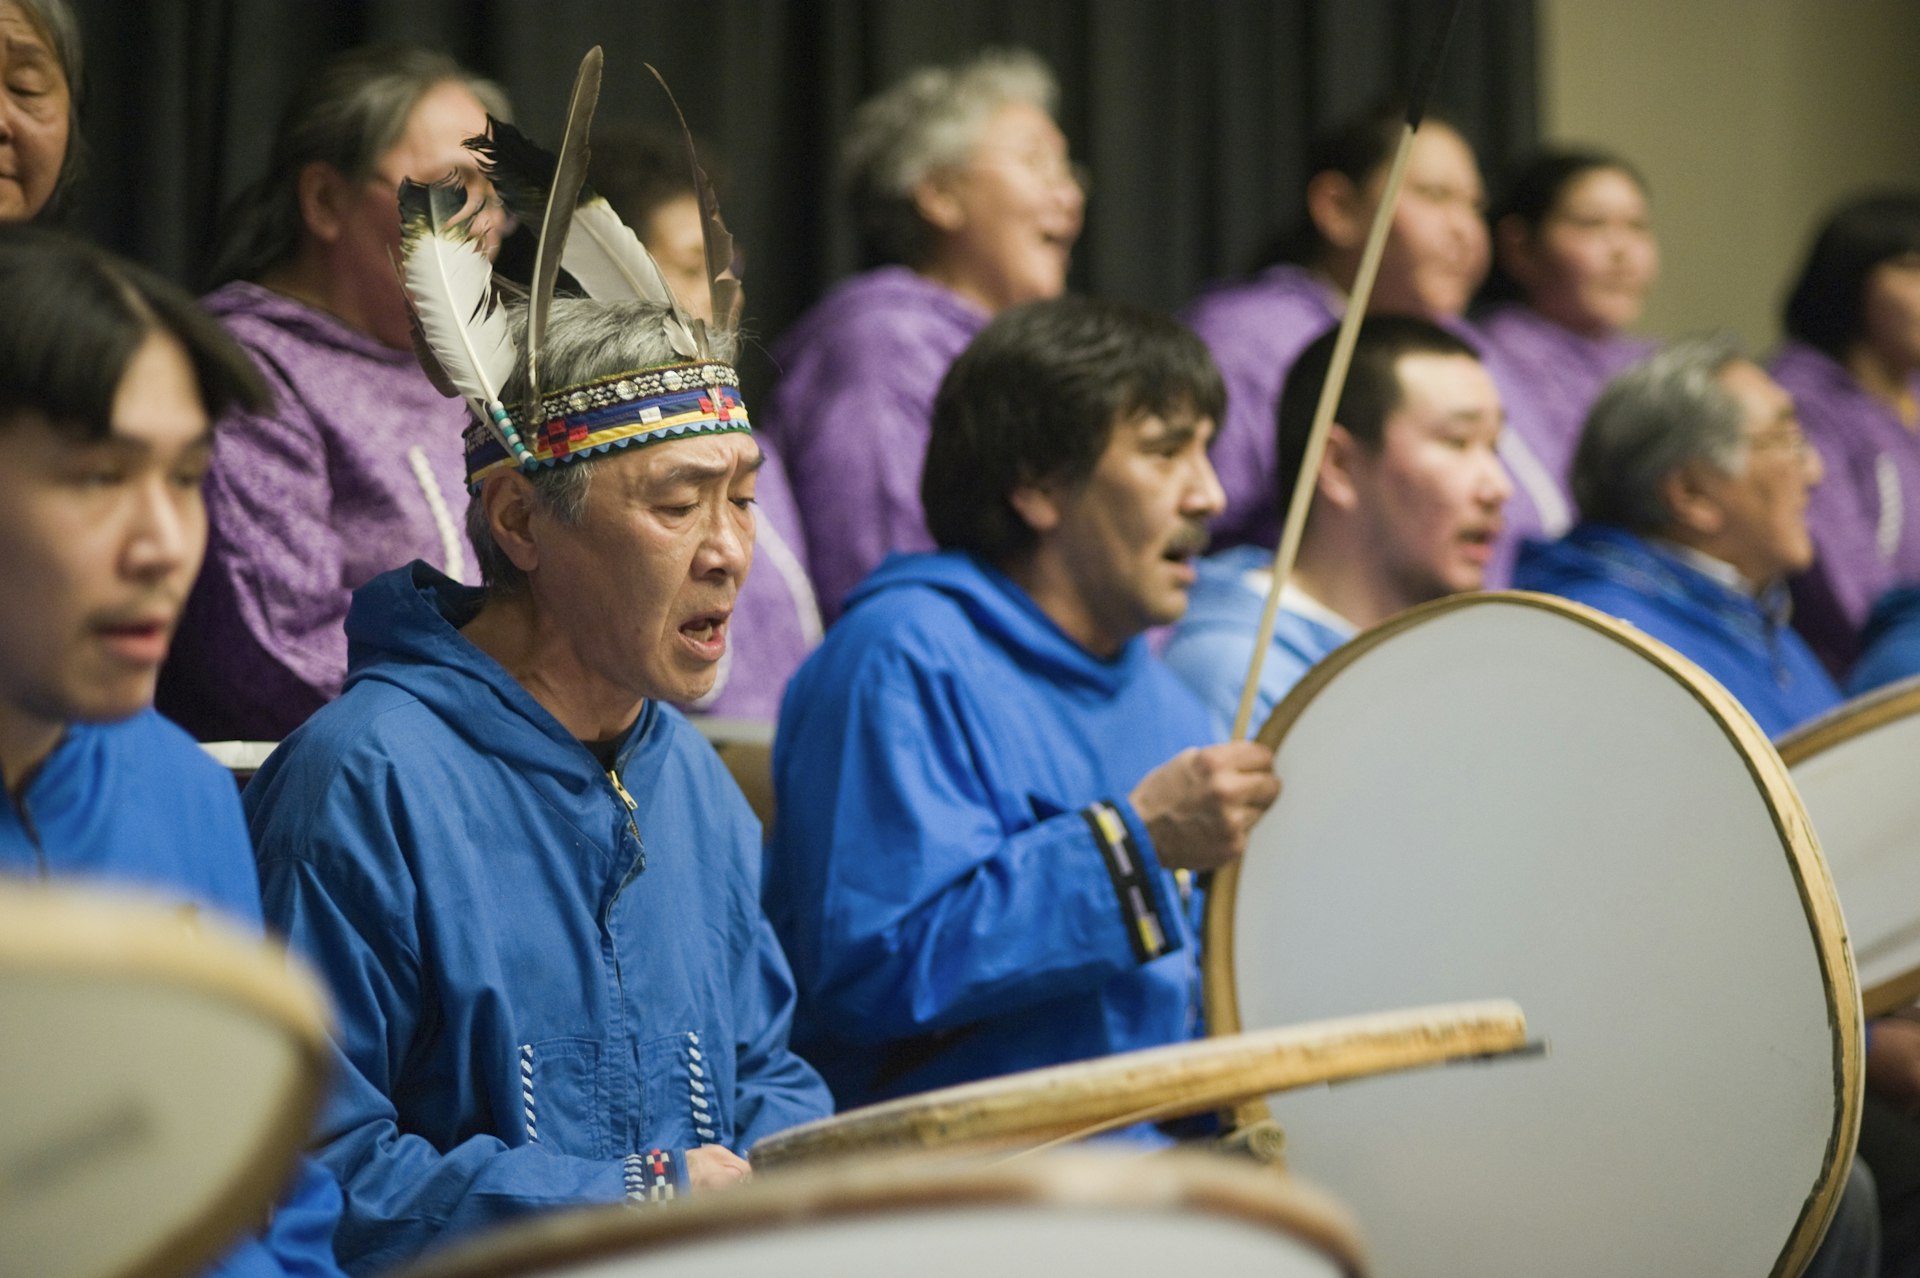 Nagsragmiut Inupiaq Eskimo Drummers of Anaktuvuk Pass performing at a Native Foundation event at the Dena'ina Convention Center, Anchorage, Southcentral, Alaska